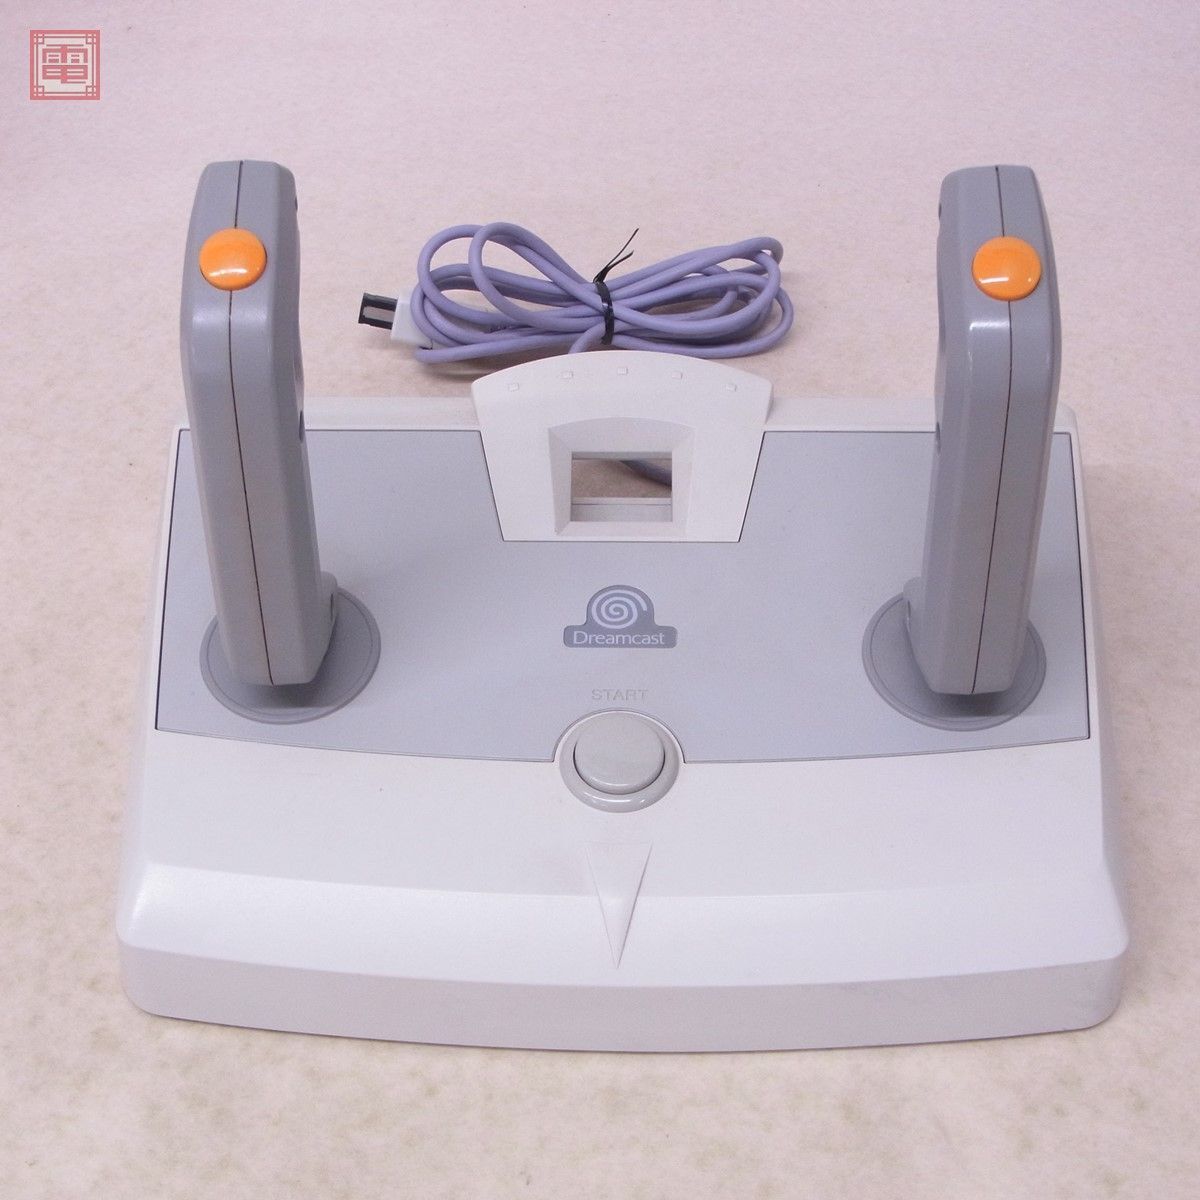  operation goods DC Dreamcast twin stick HKT-7500 peripherals doli Cath Dreamcast Sega SEGA box attaching [20